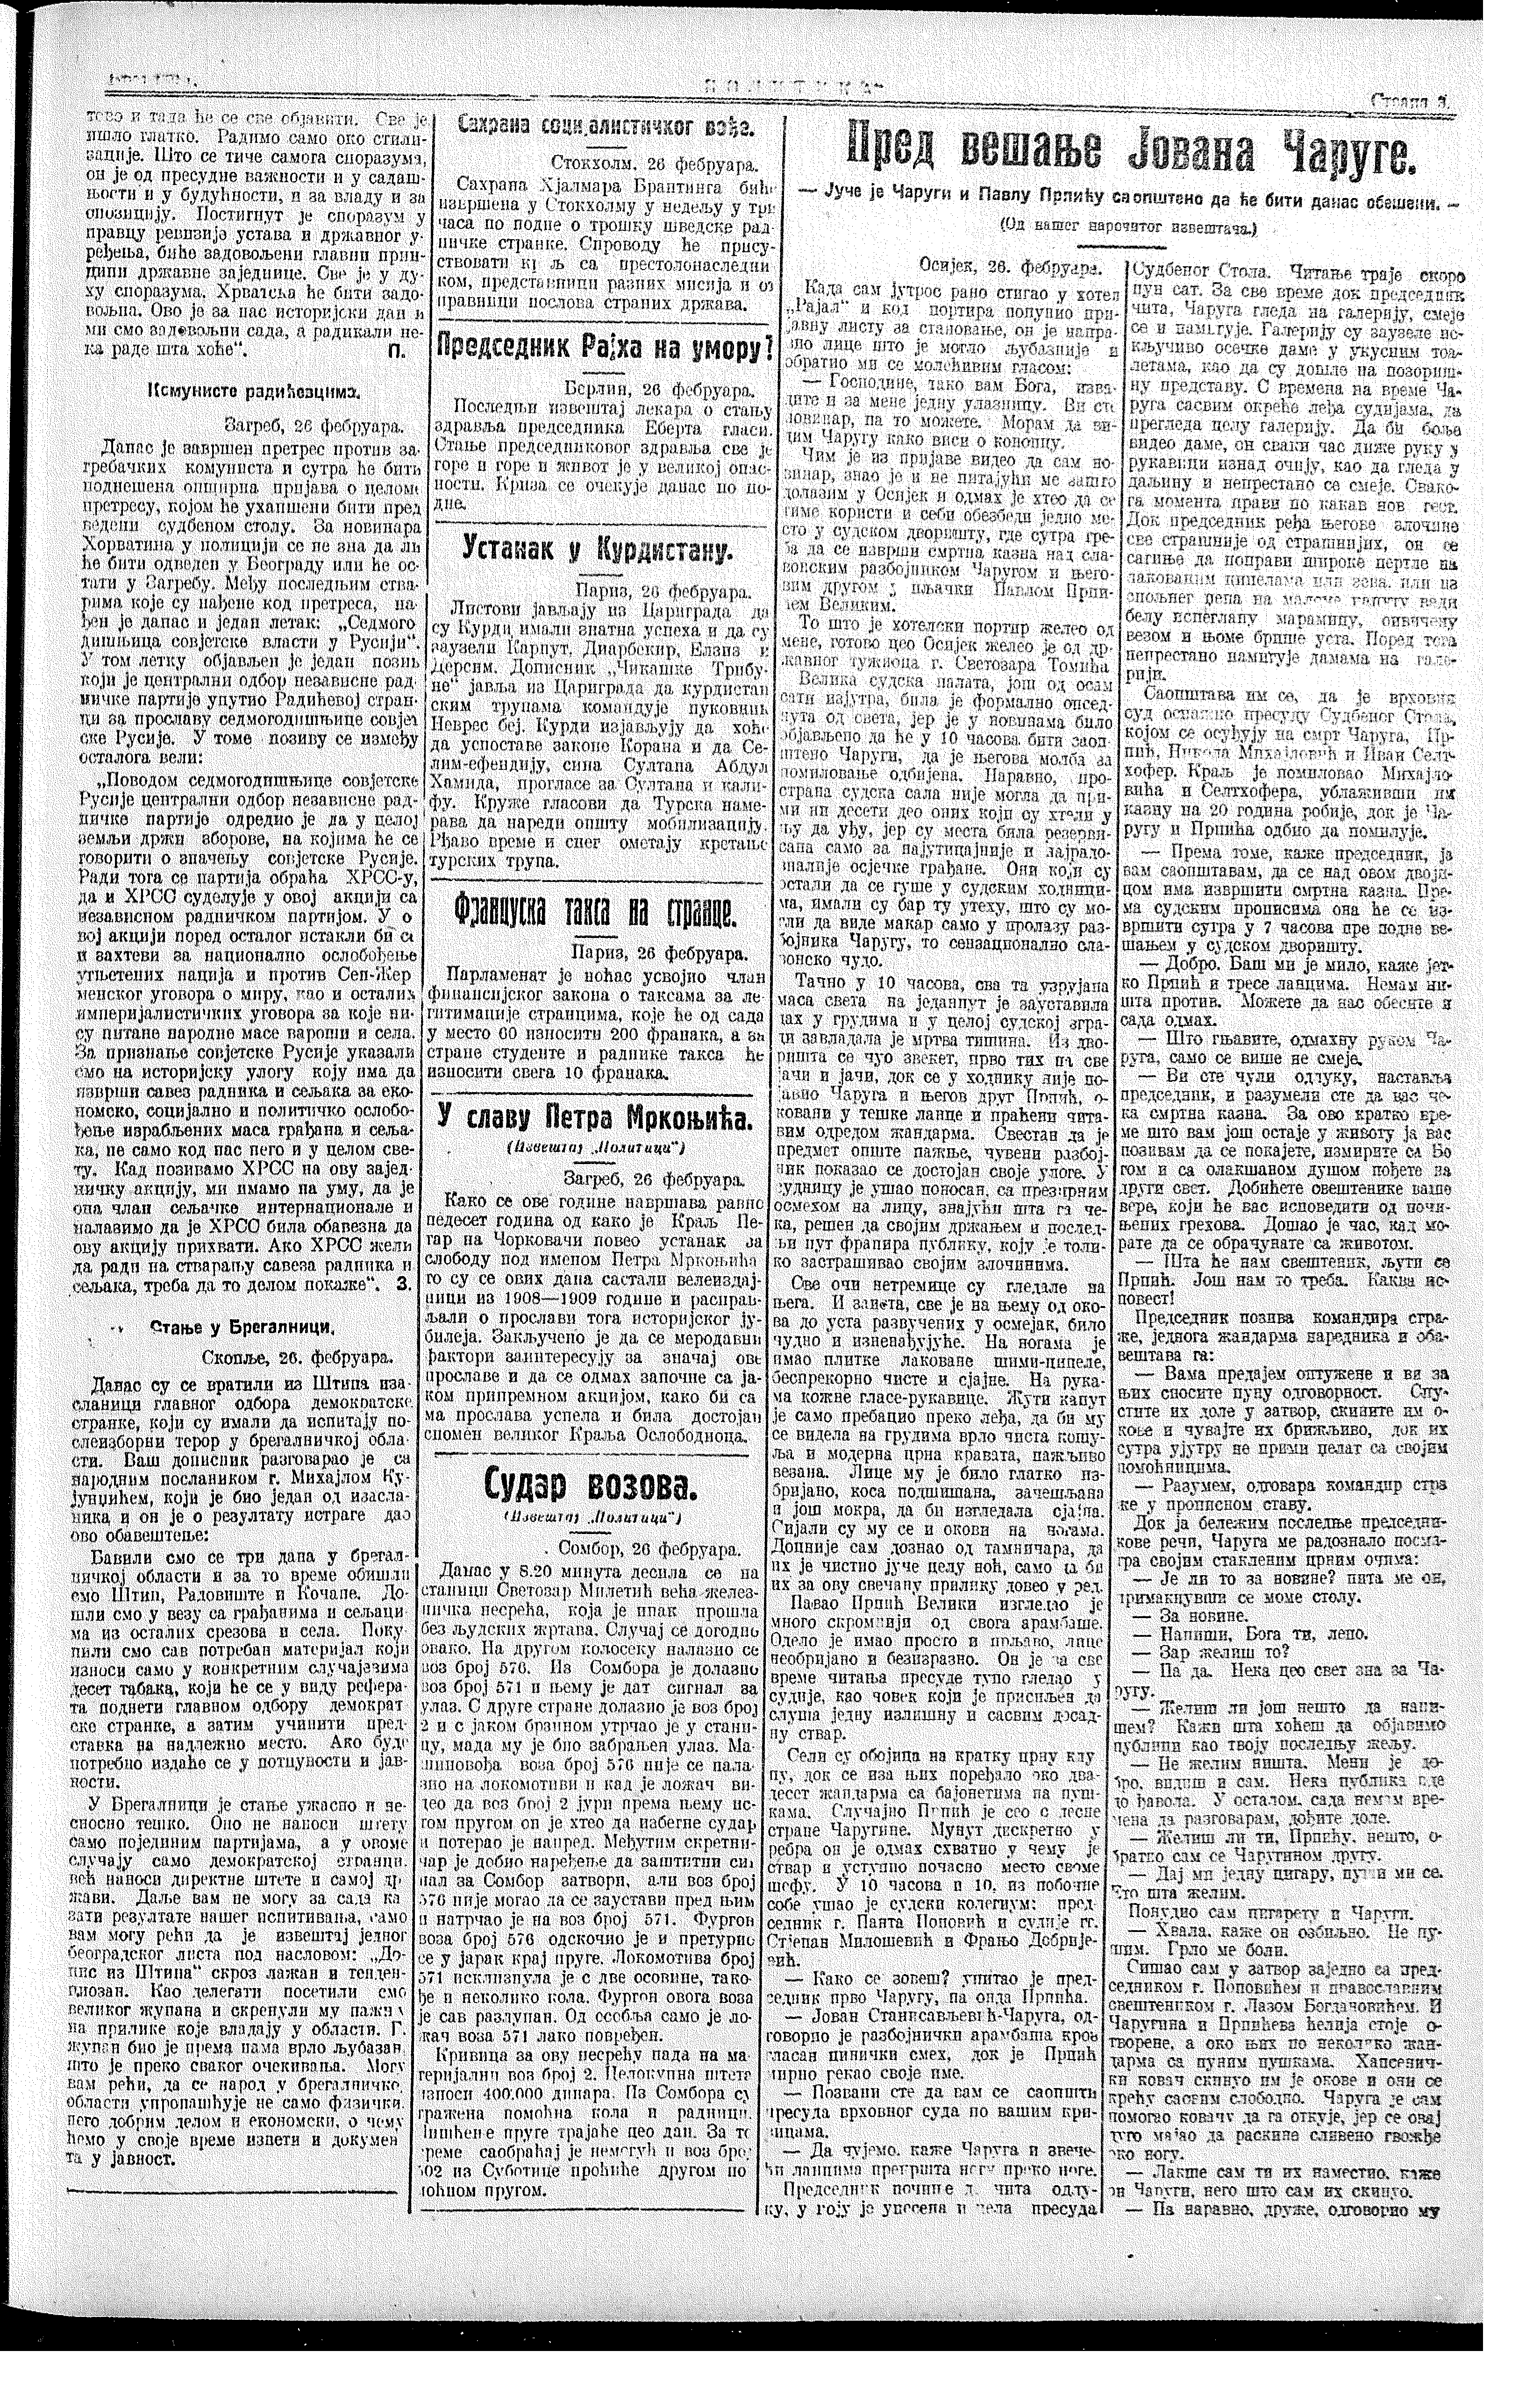 Pred vešanje Jovana Čaruge, Politika, 27.02.1925.